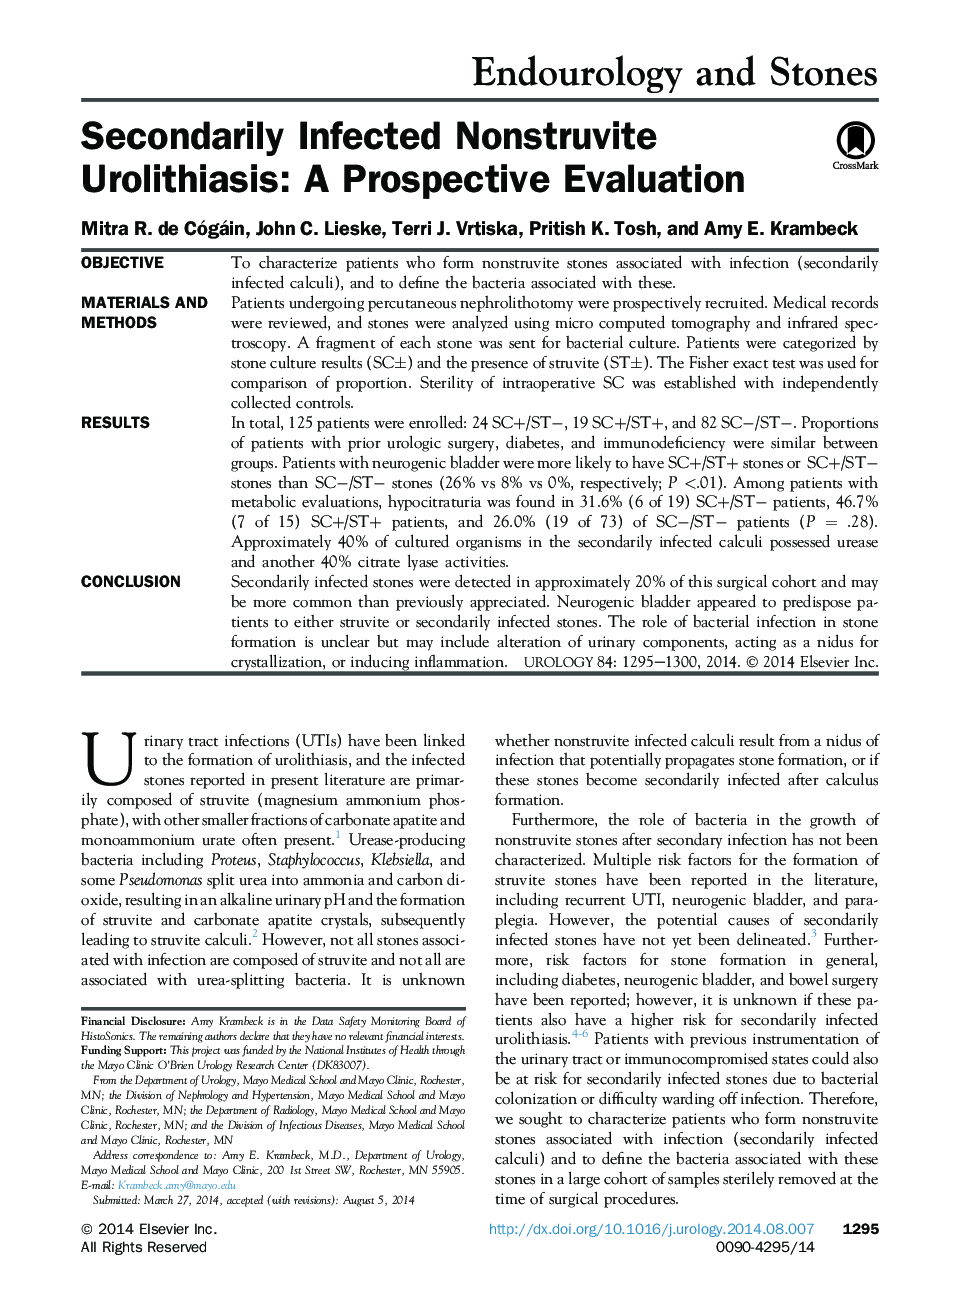 Secondarily Infected Nonstruvite Urolithiasis: A Prospective Evaluation 